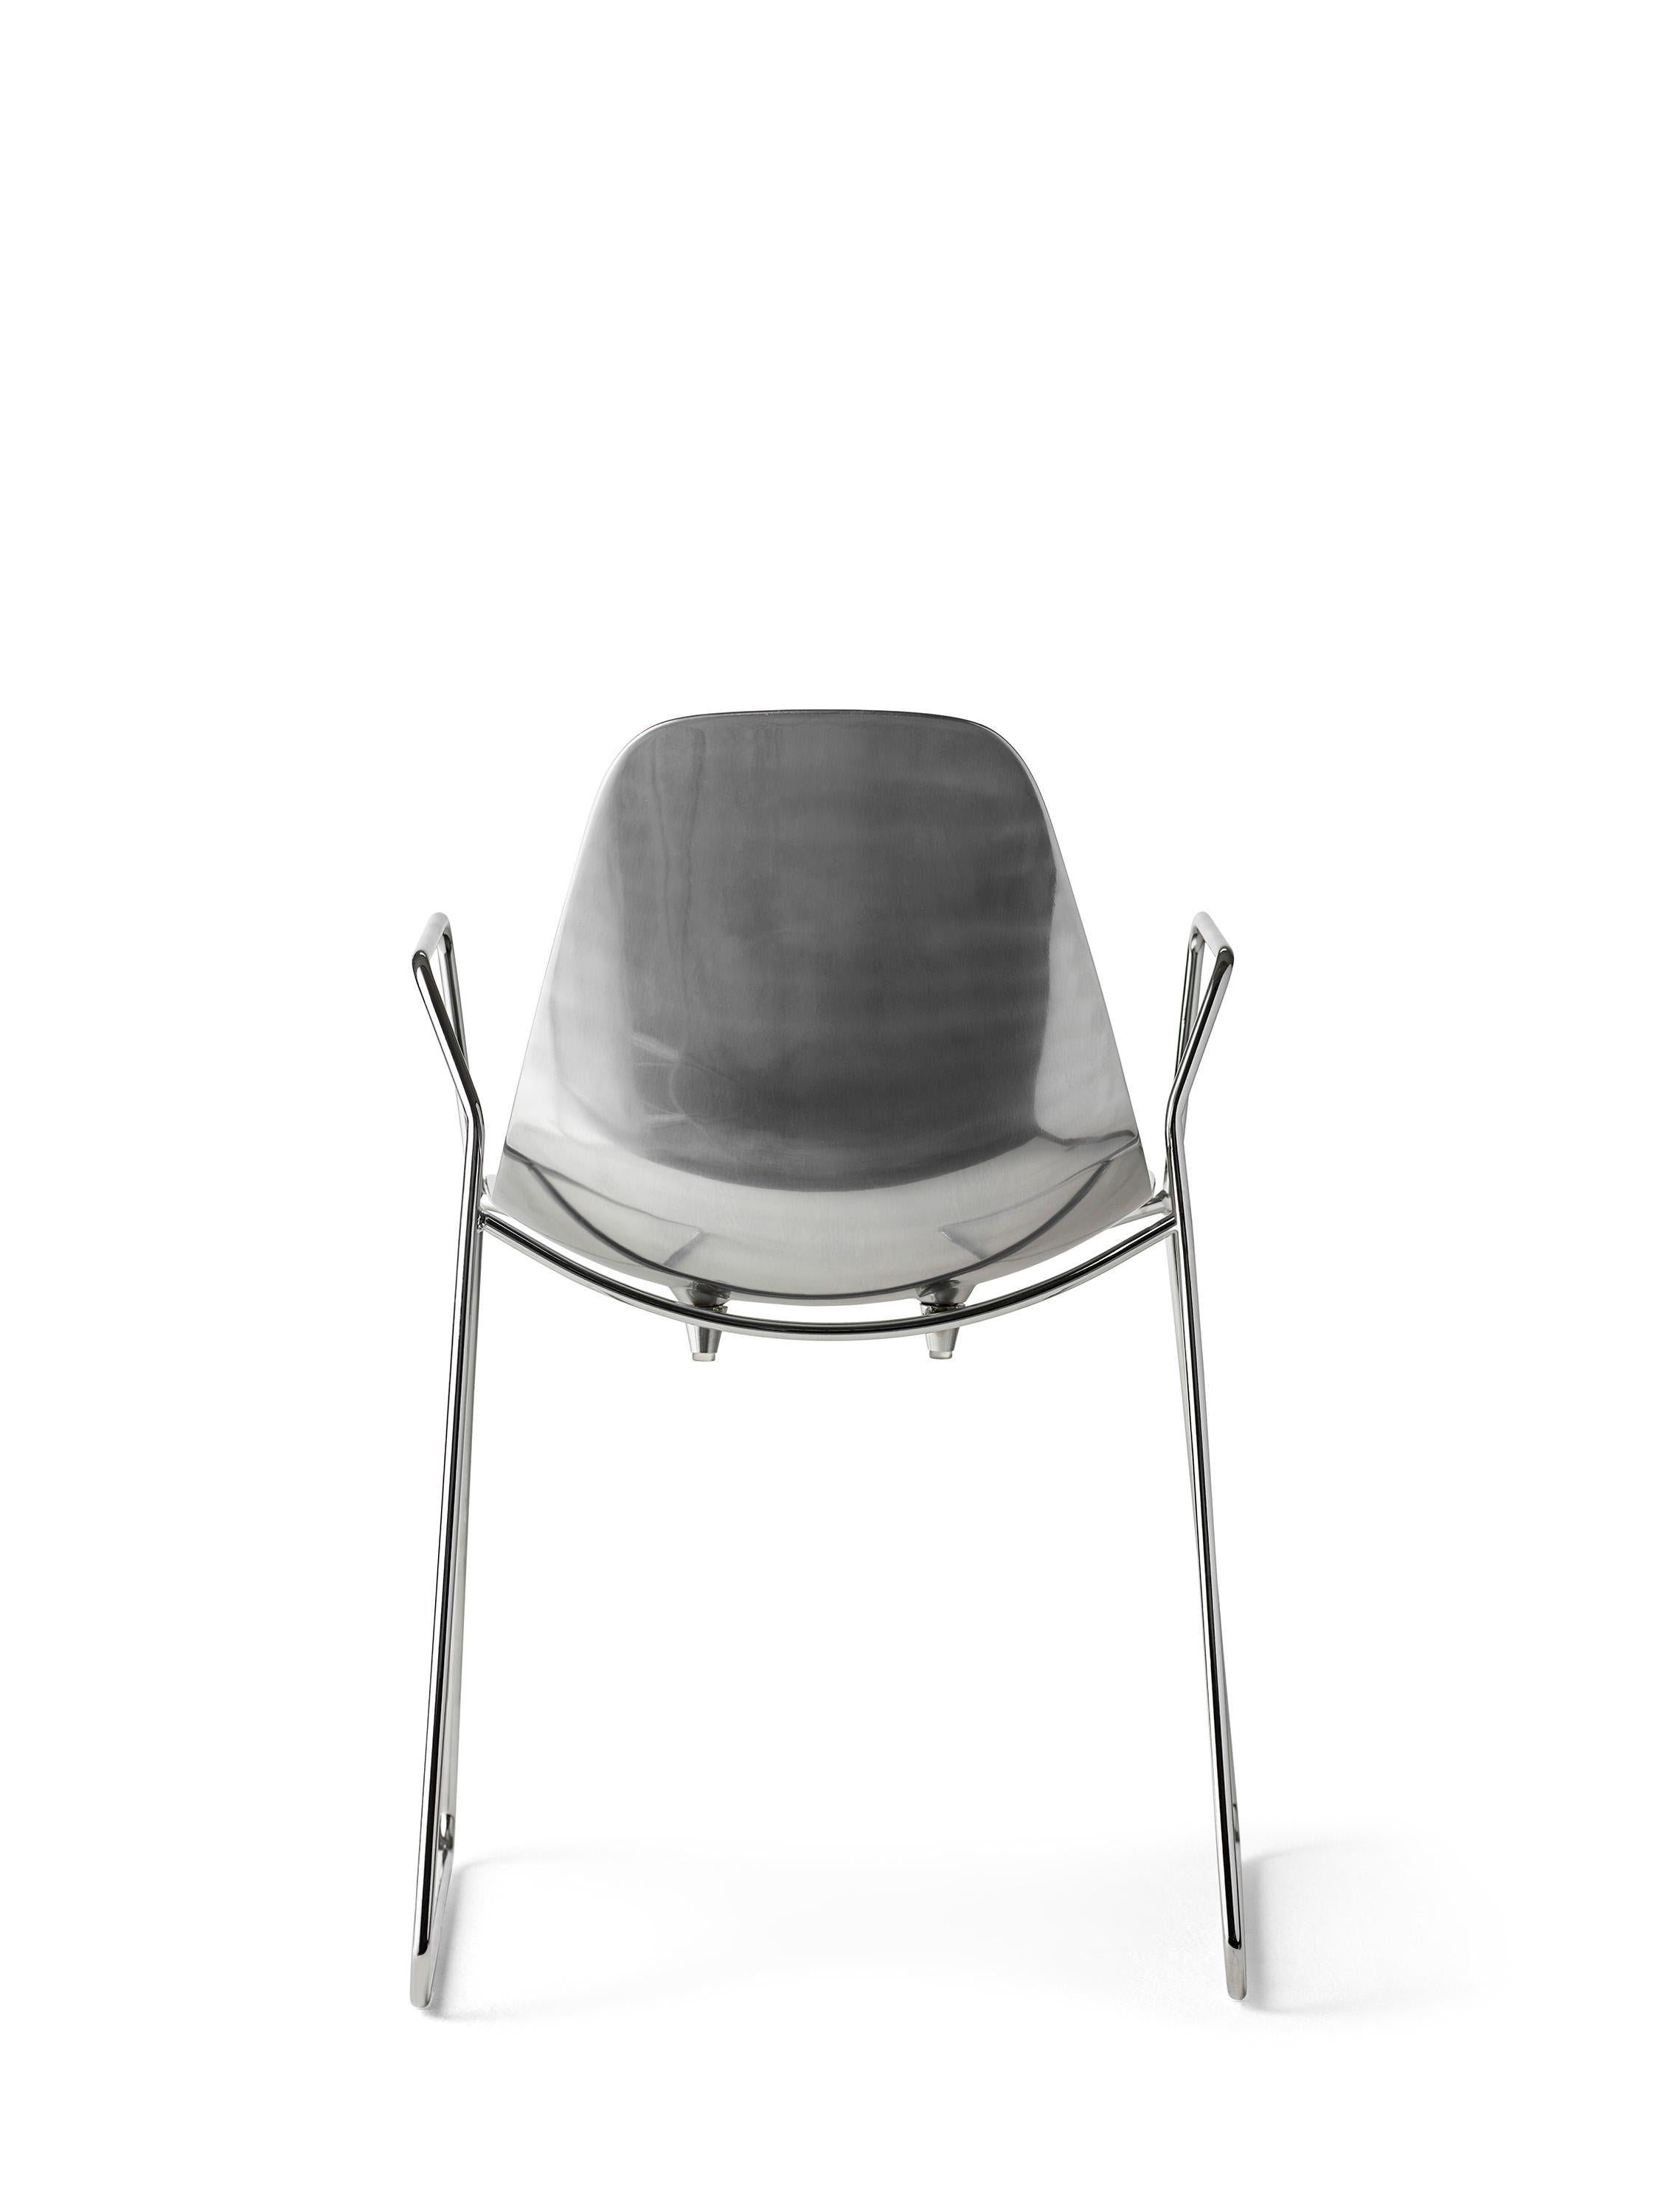 En vente : Silver (Mirrored Aluminum with Chrome Structure) Opinion Ciatti chaise empilable Mammamia à baldaquin avec accoudoirs, lot de 2